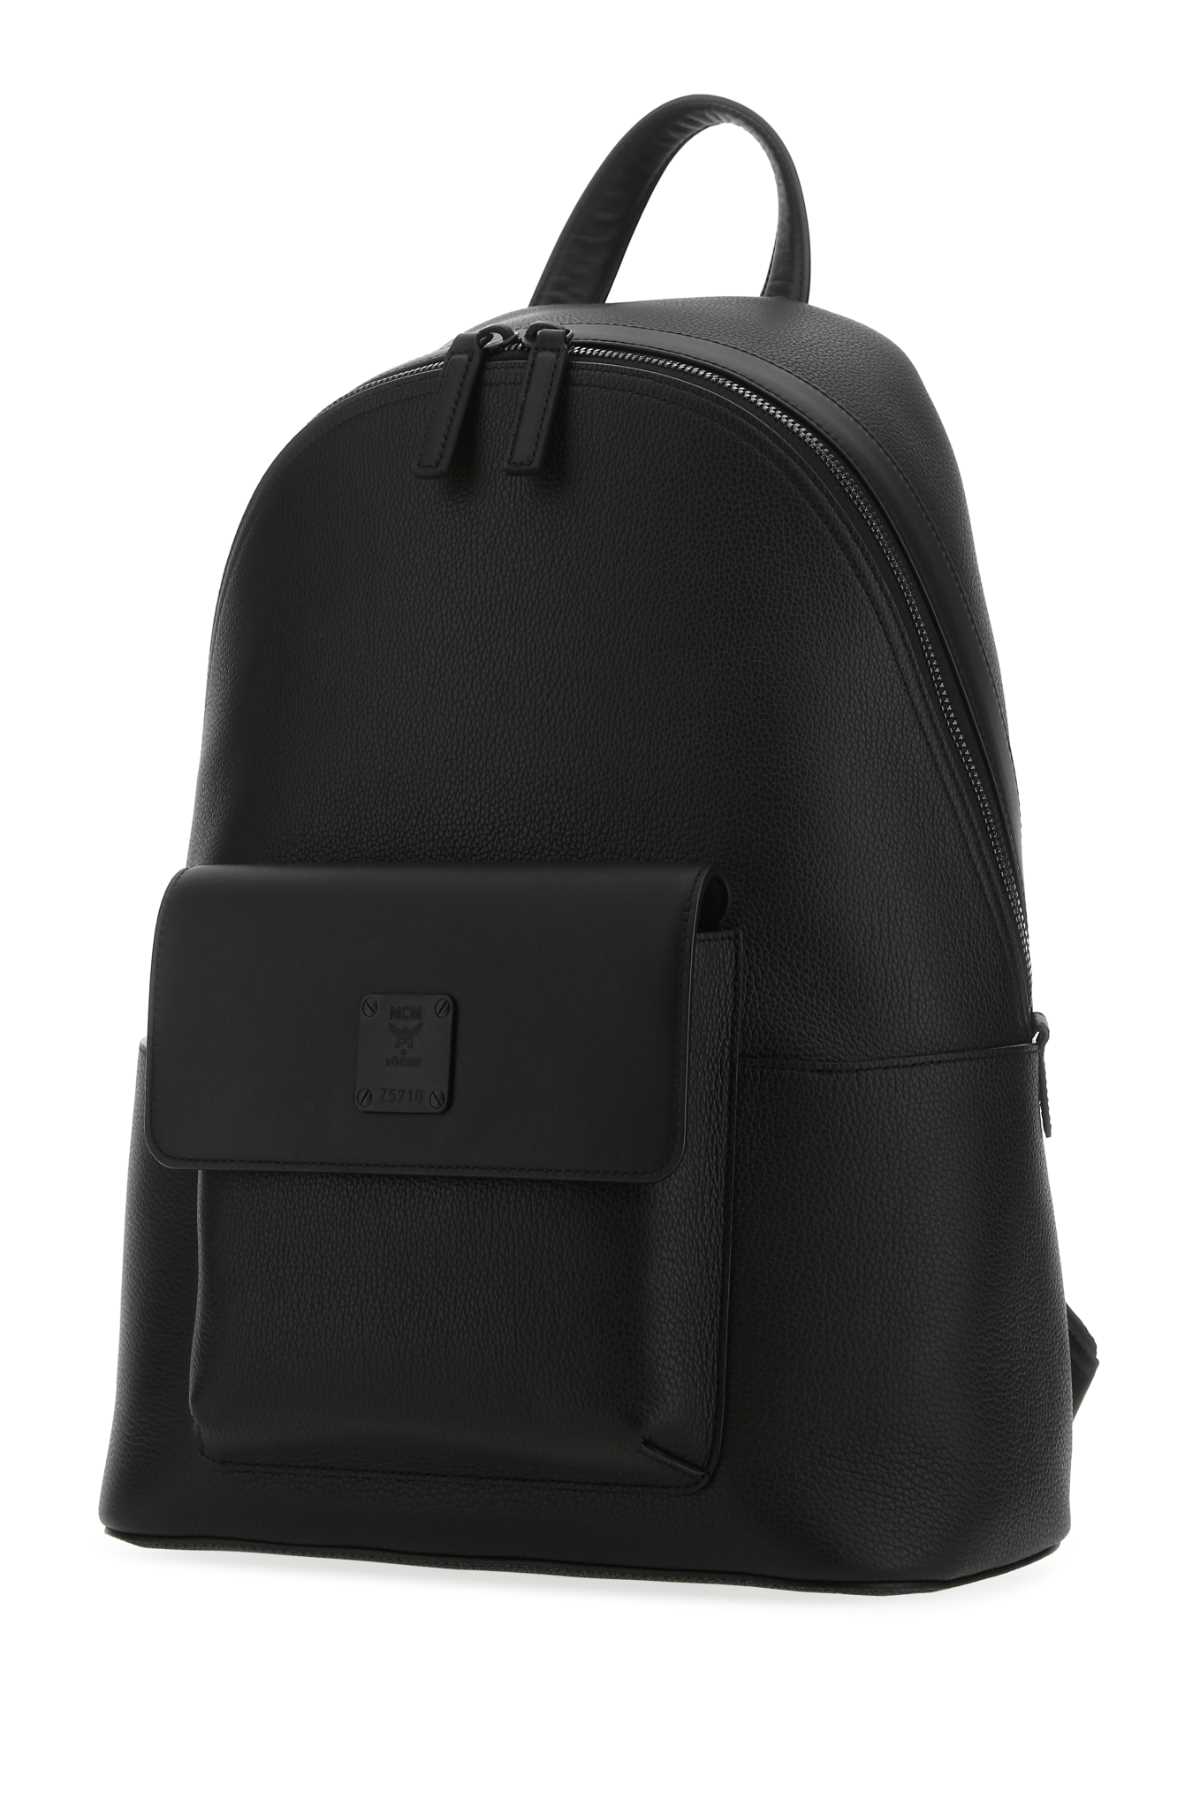 Mcm Black Leather Stark Backpack In Bk